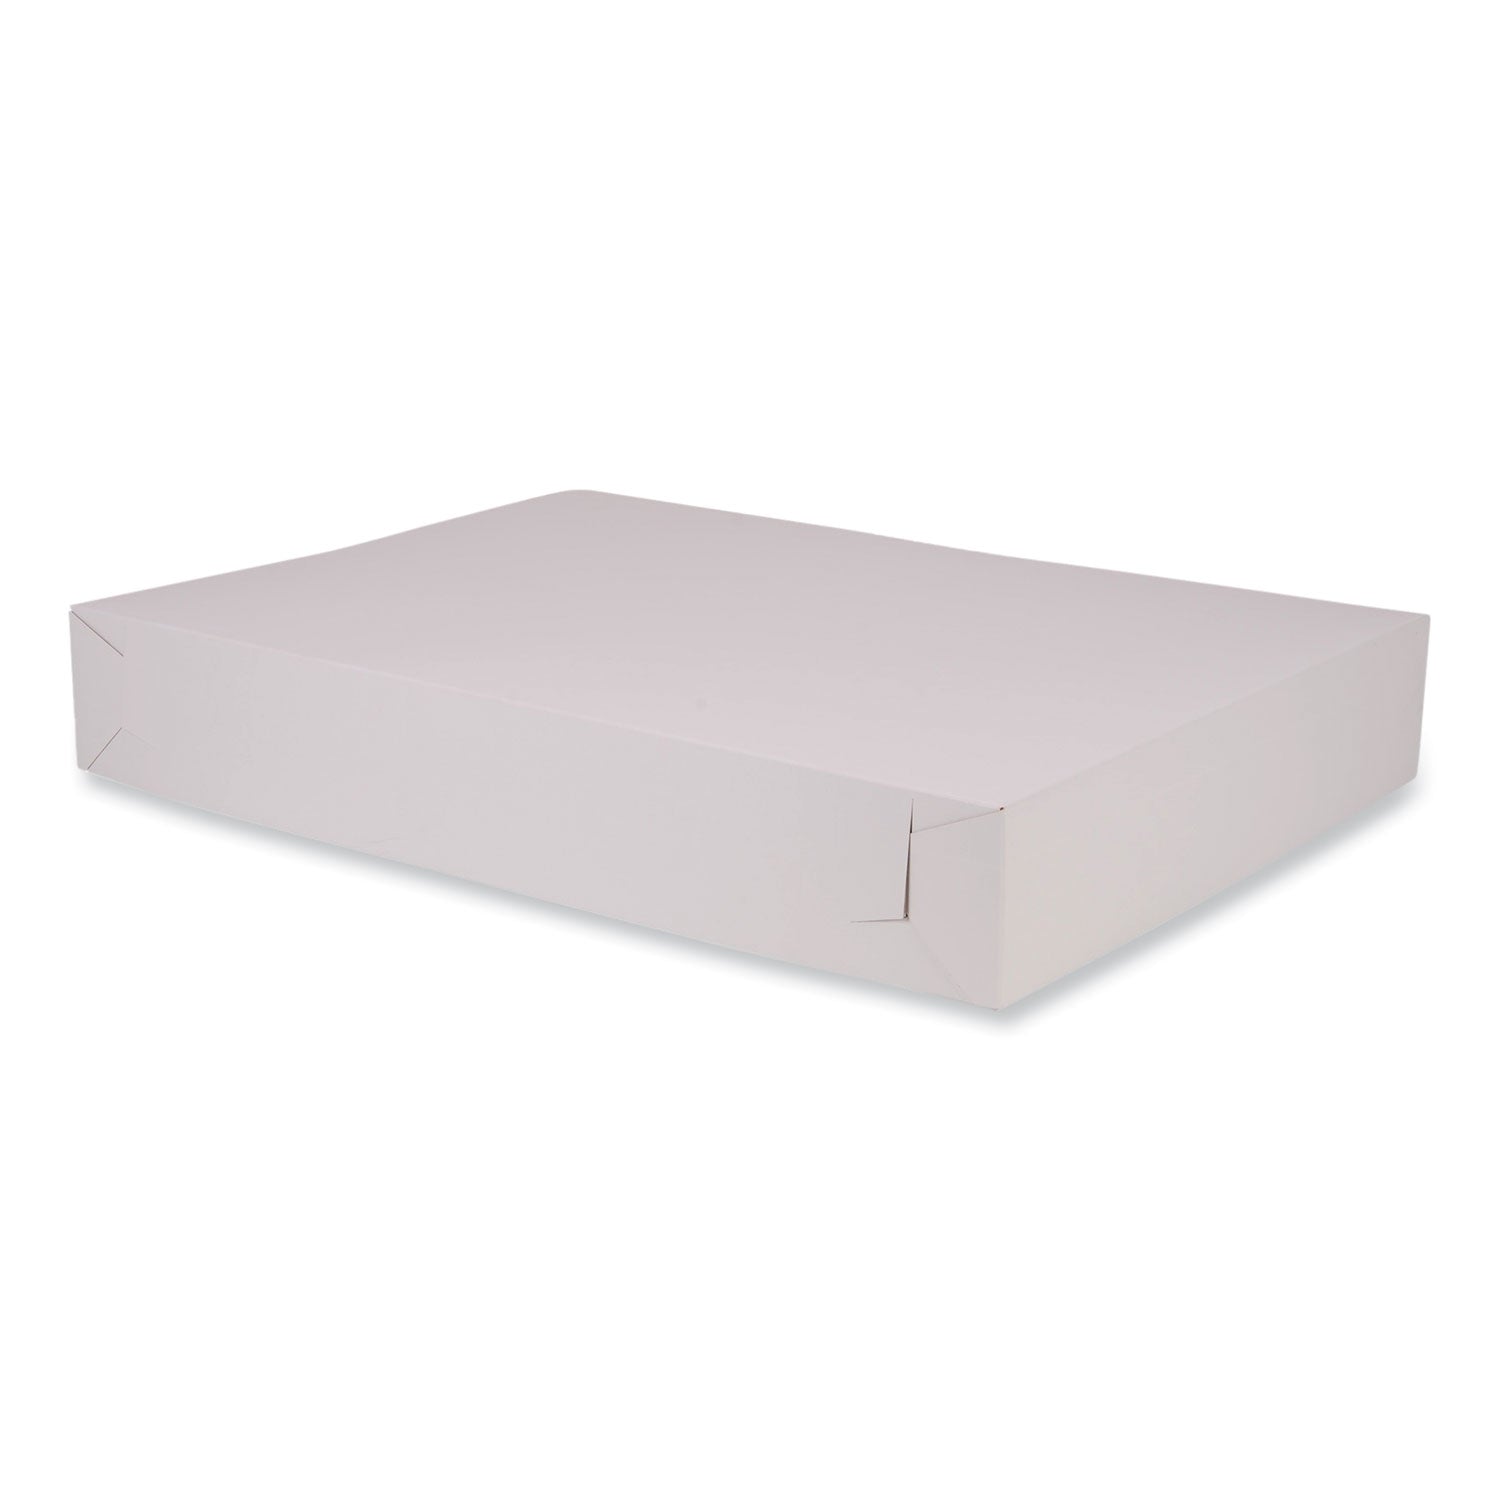 bakery-boxes-standard-26-x-185-x-4-white-paper-50-carton_sch1995 - 4